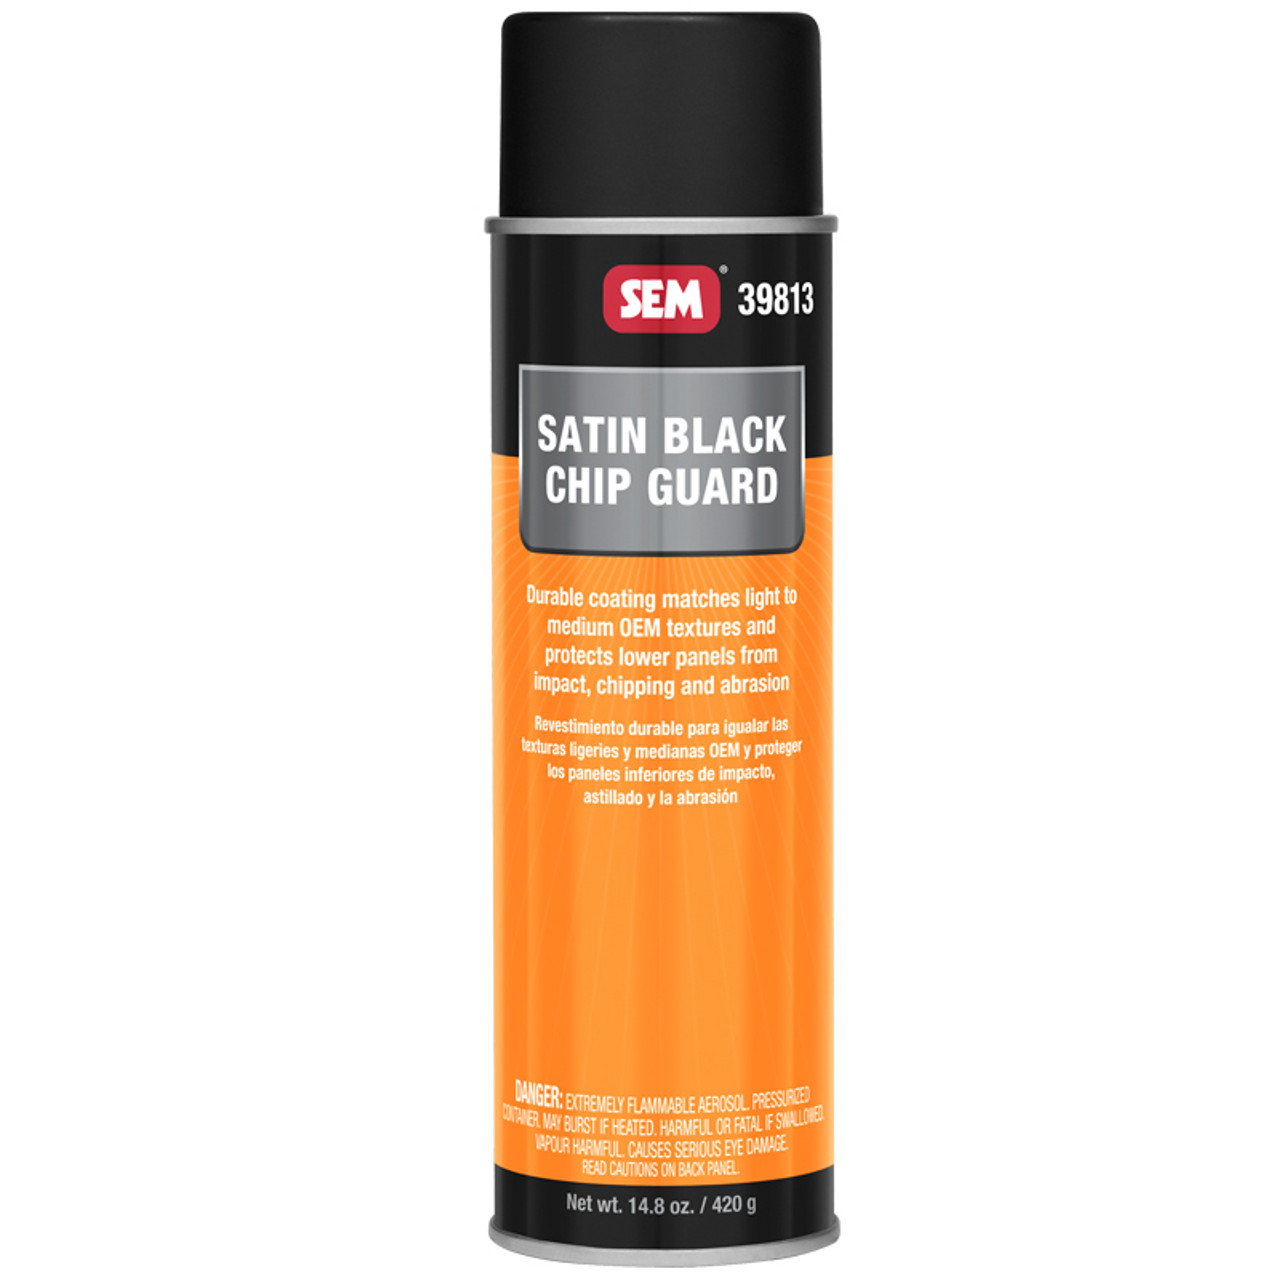 SEM 49143 Trim Black Ultra Satin